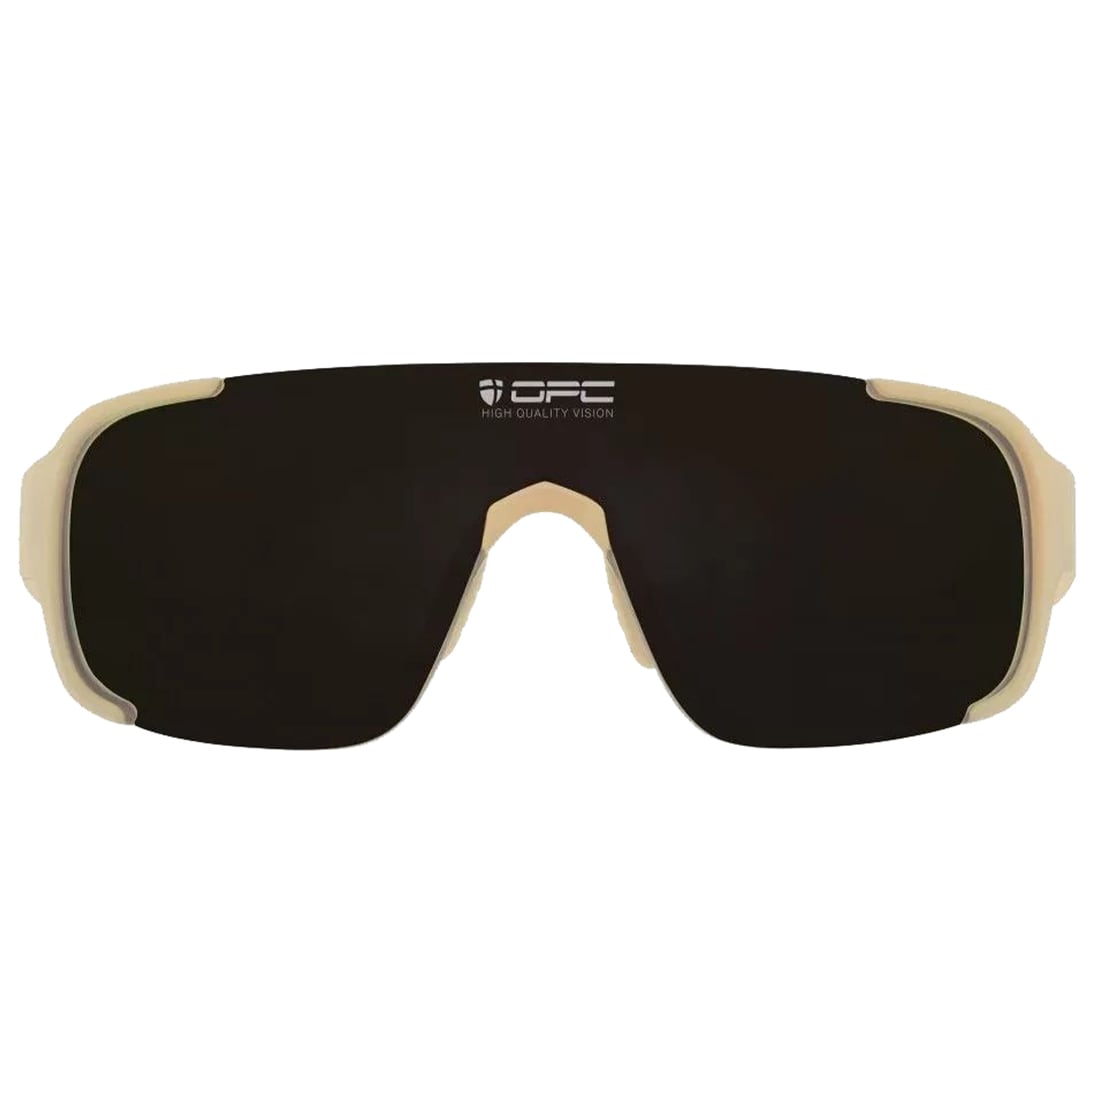 Сонцезахисні окуляри OPC All Round Jet I Crystal Vision - Matt Desert